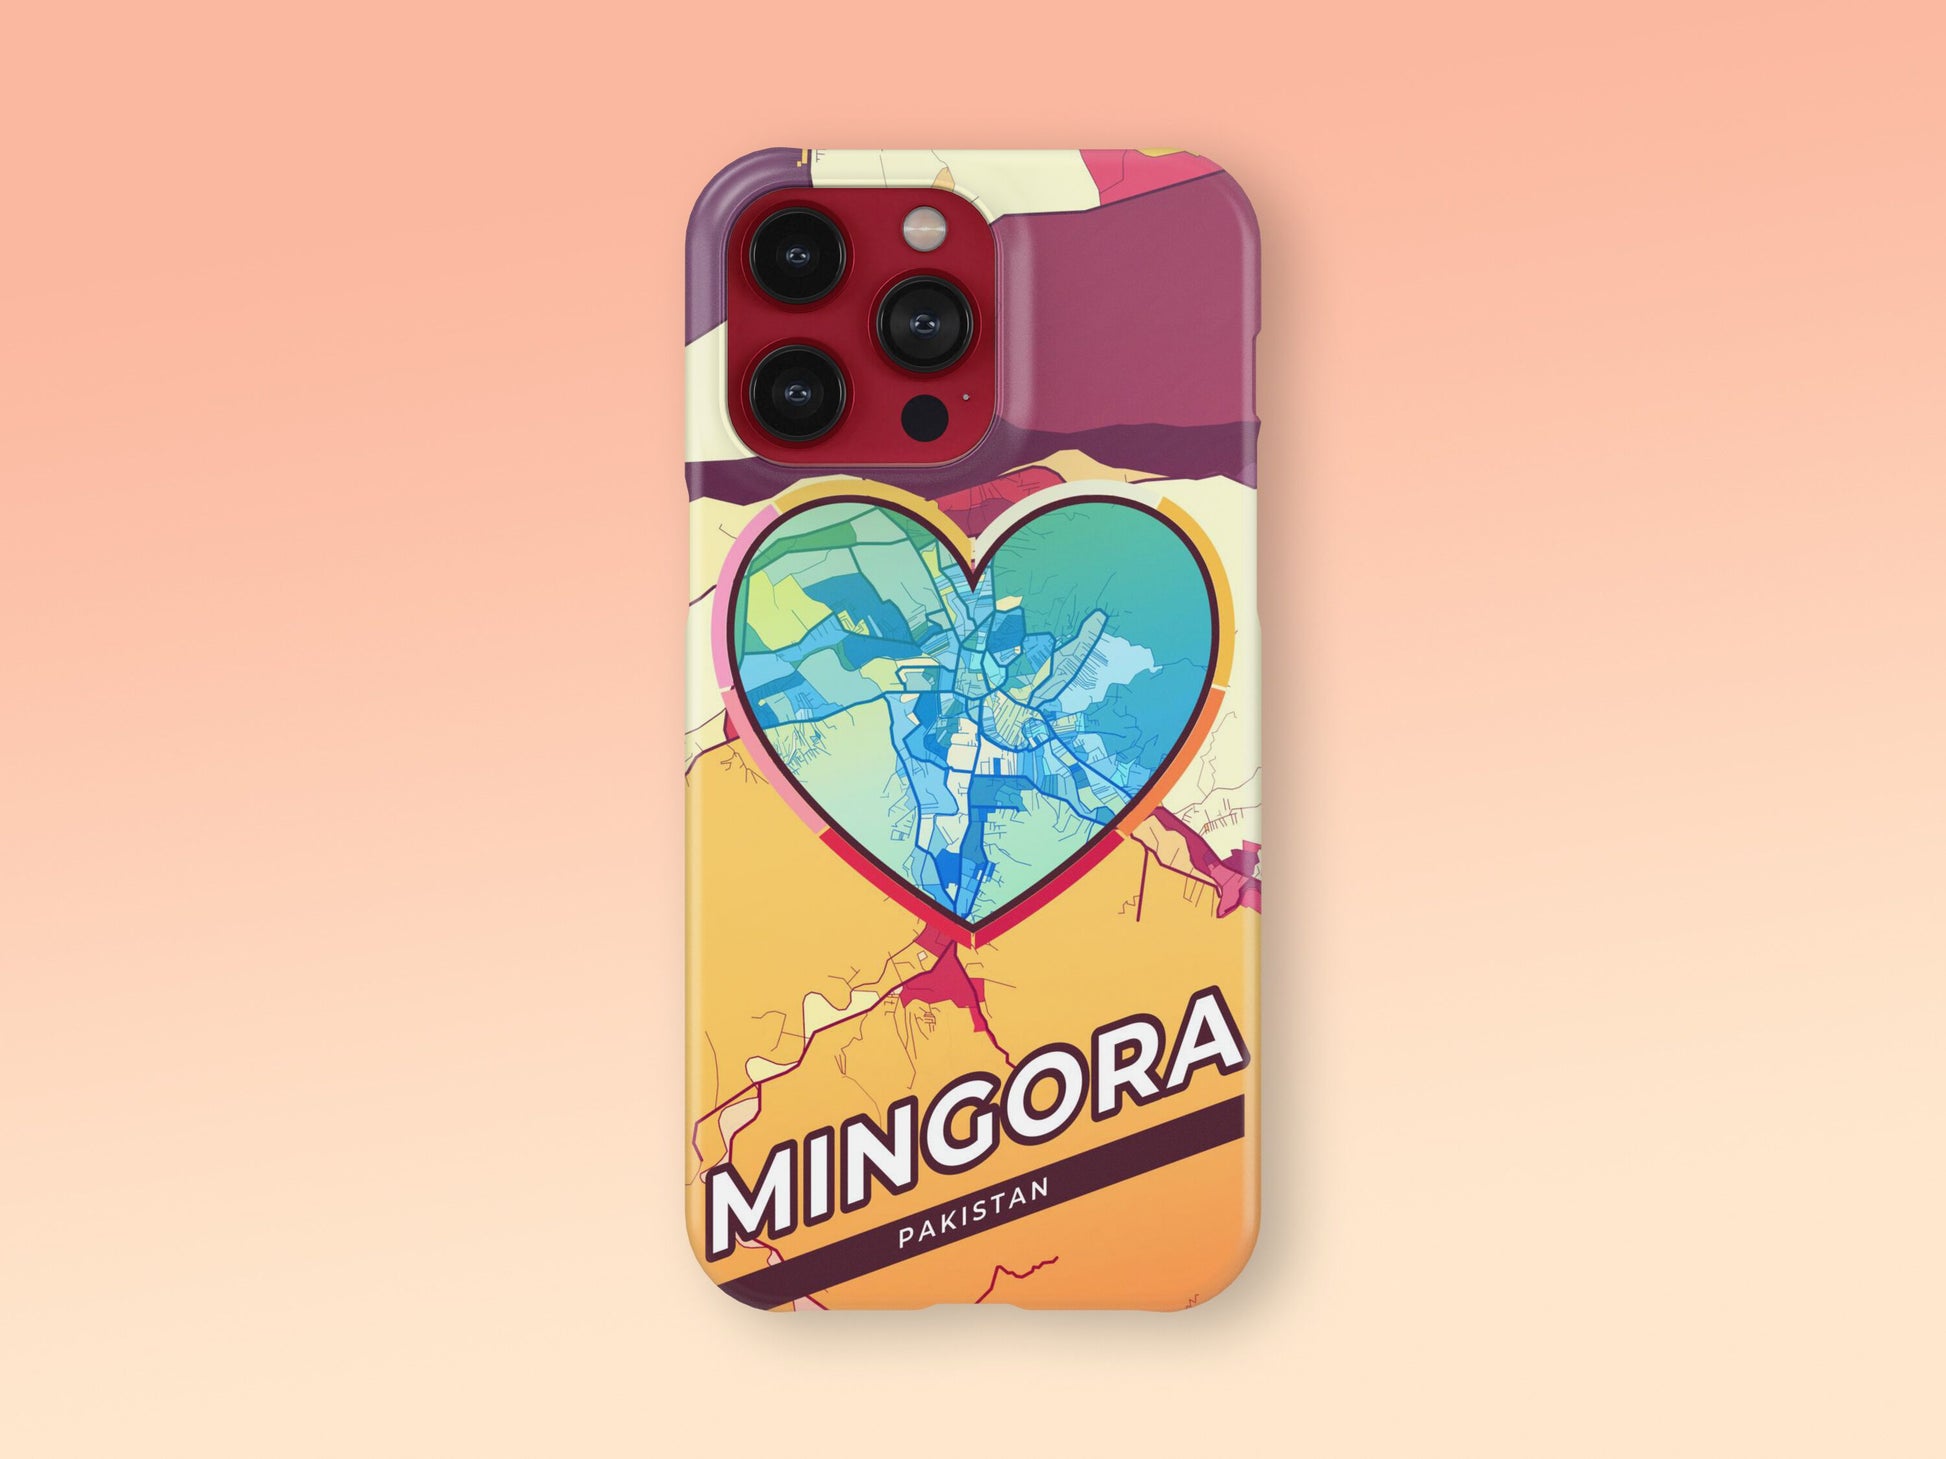 Mingora Pakistan slim phone case with colorful icon 2